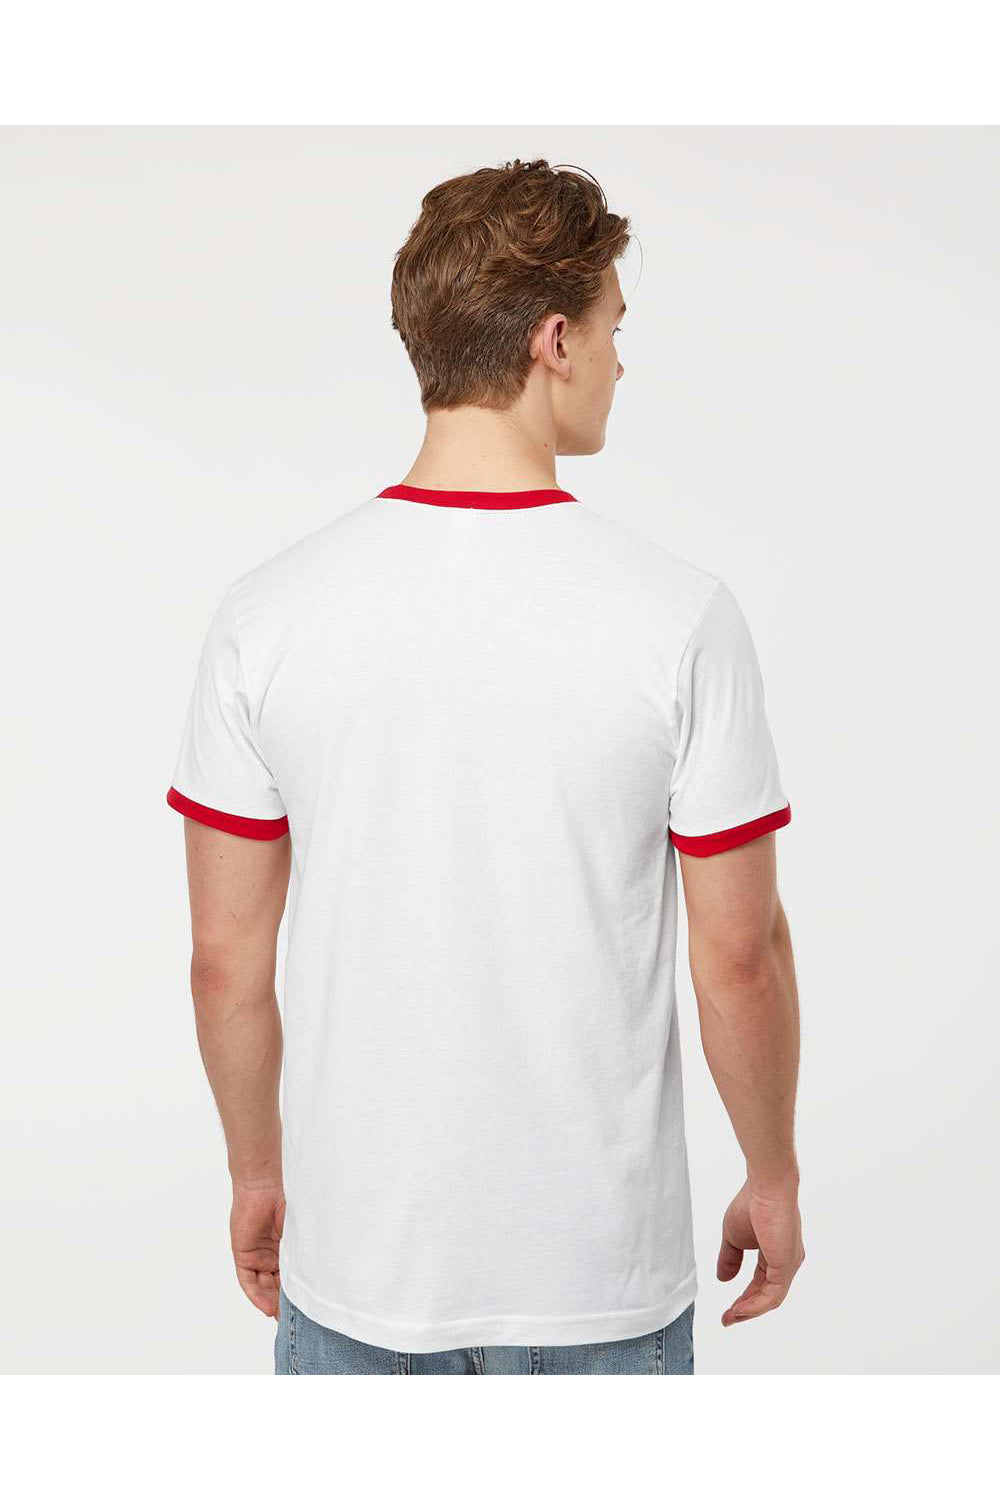 Tultex 246 Mens Fine Jersey Ringer Short Sleeve Crewneck T-Shirt White/Red Model Back